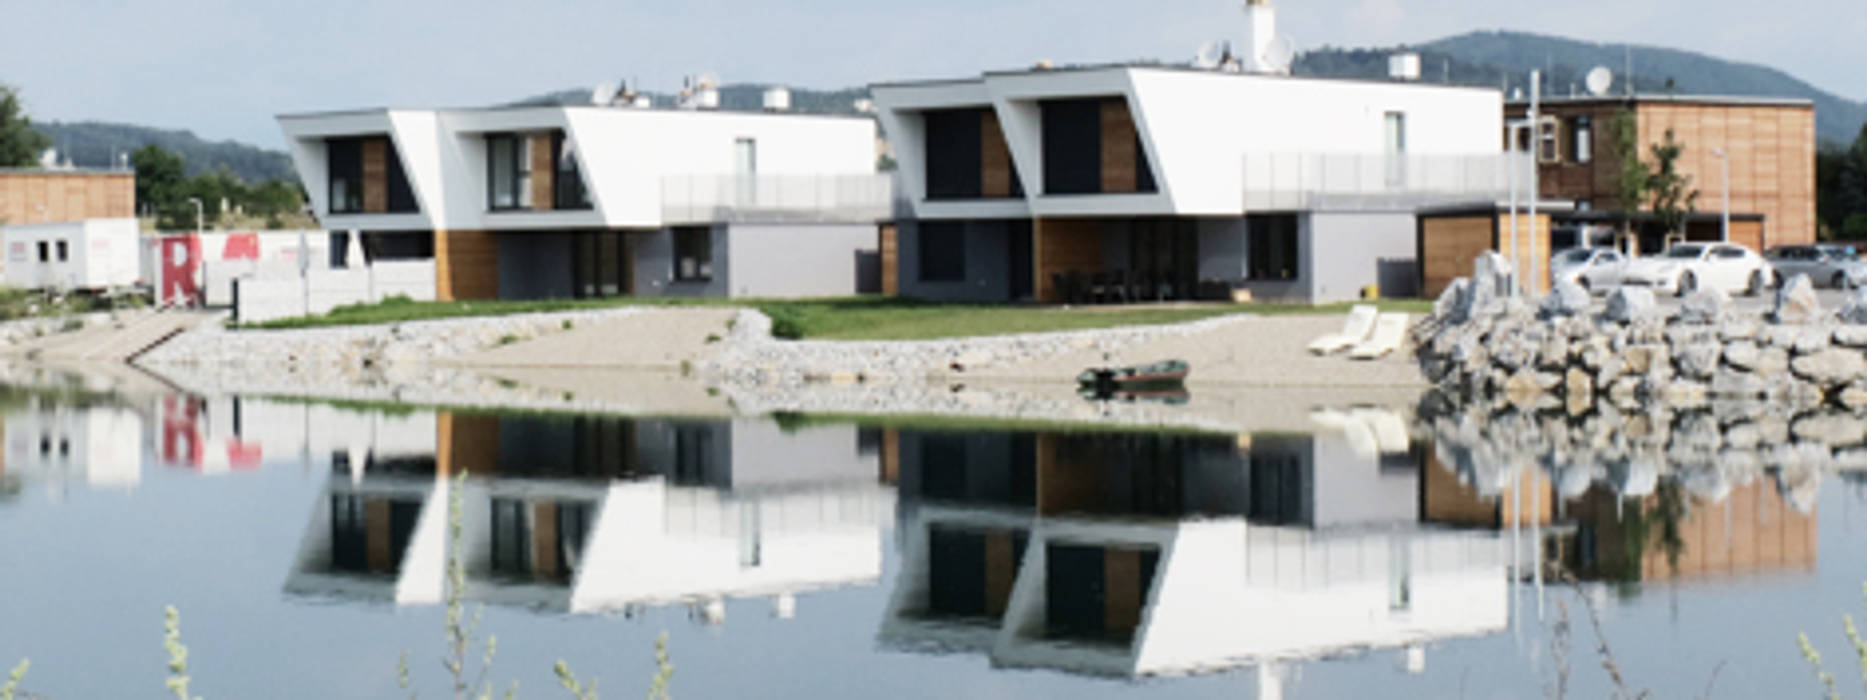 Seeresort Steiermark, grmw grmw Modern houses